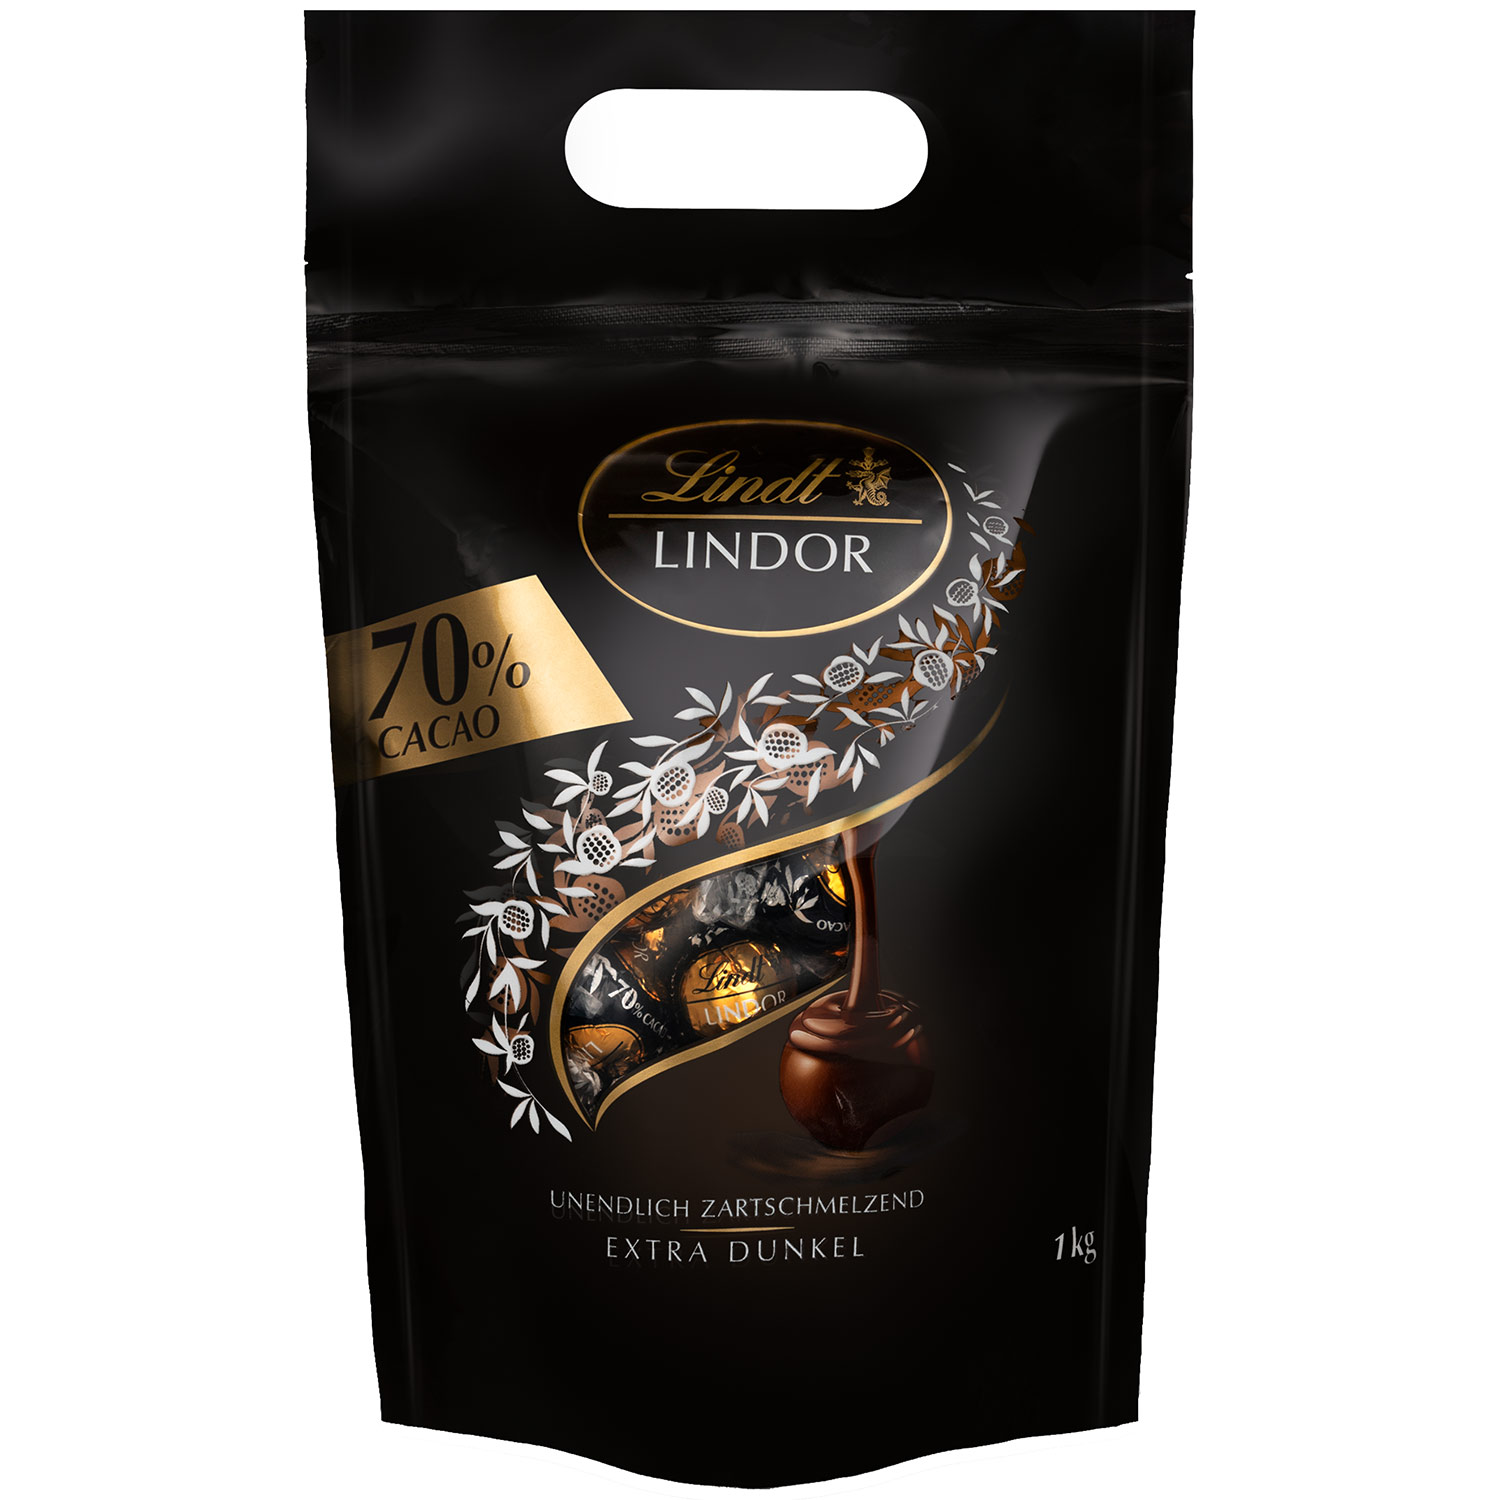 Lindt Lindor Kugeln 70% Cacao Feinherb 1kg | Online kaufen im World of ...